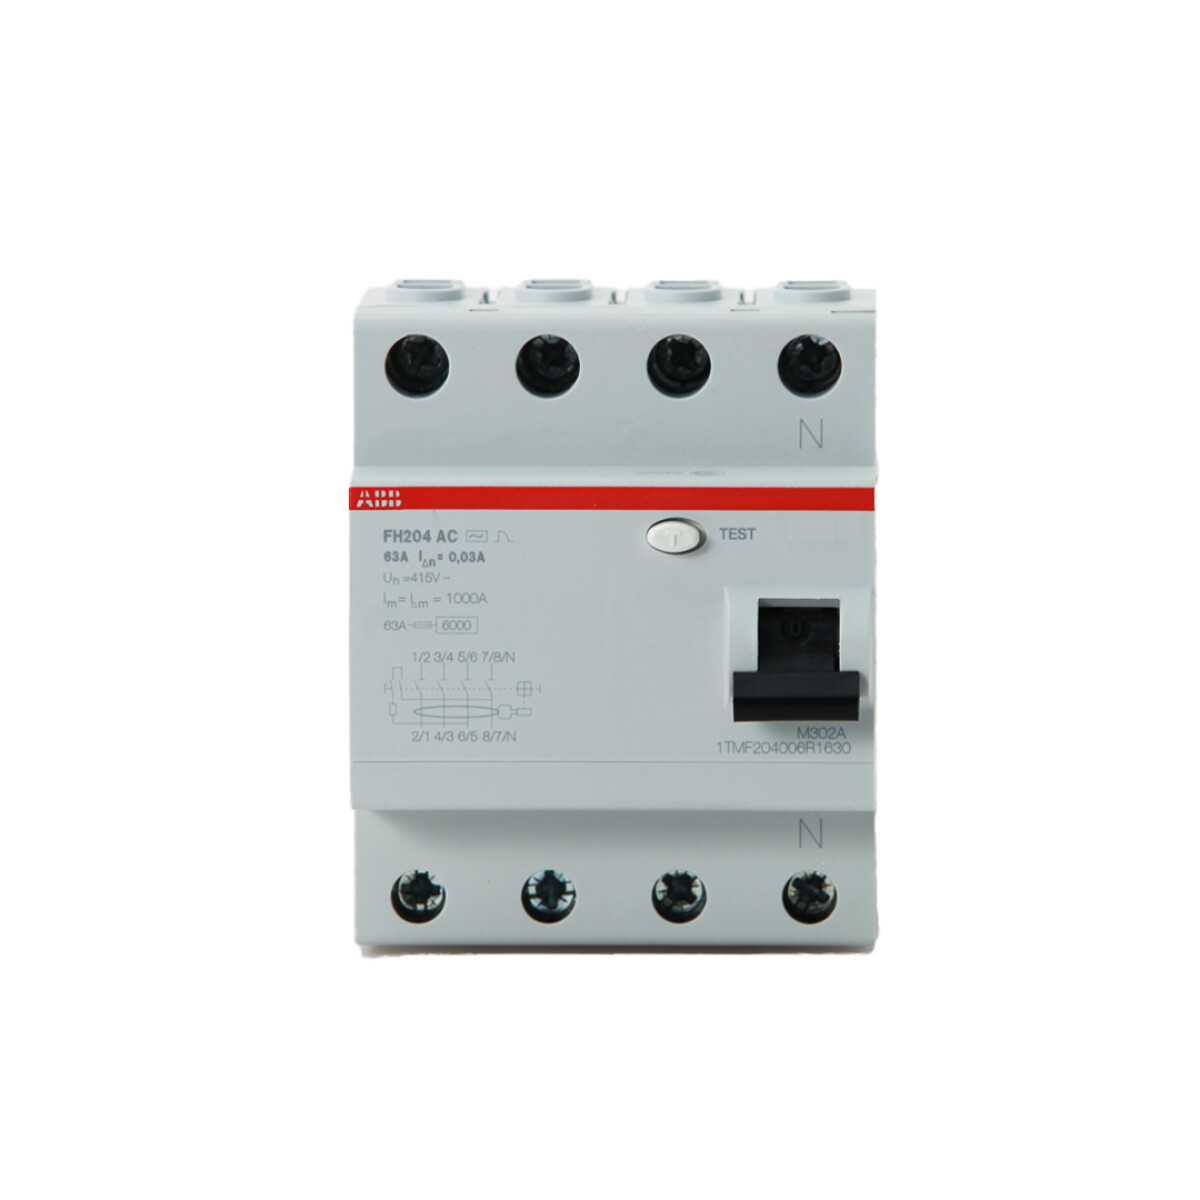 Interruptor diferencial 4P - 6kA - Linea FH200 - ABB - 25A 300mA 